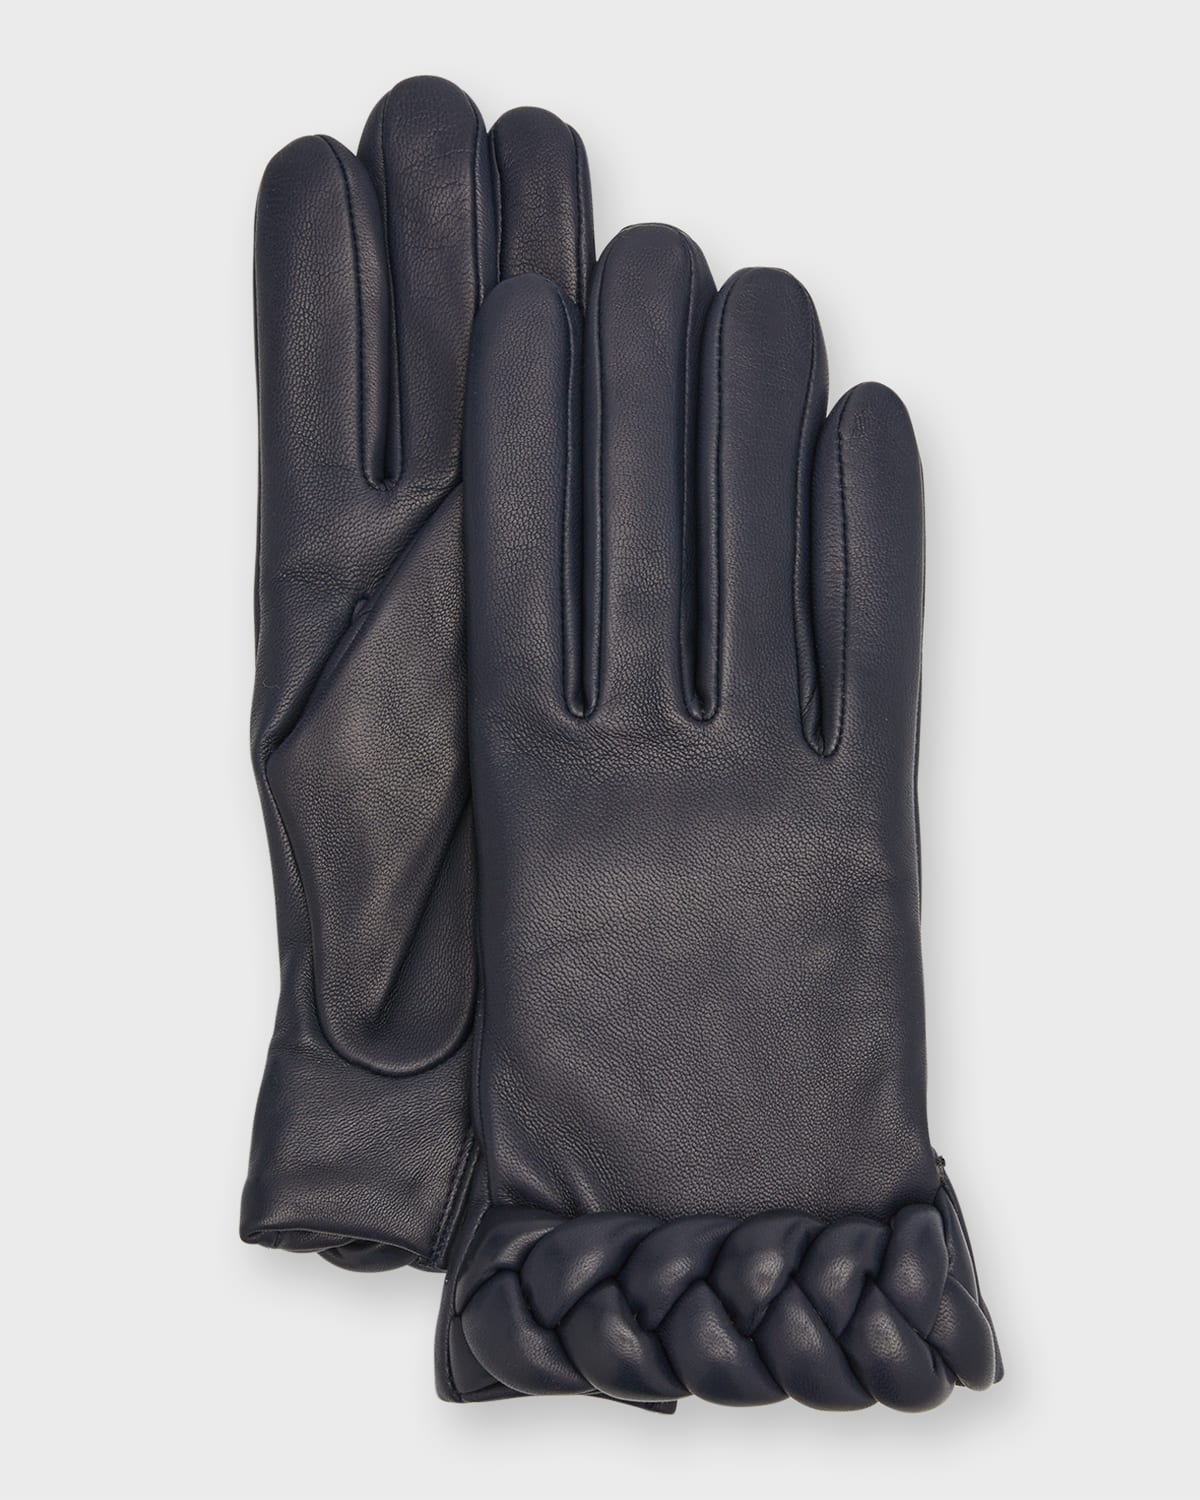 Agnelle Edith Braided Leather Gloves